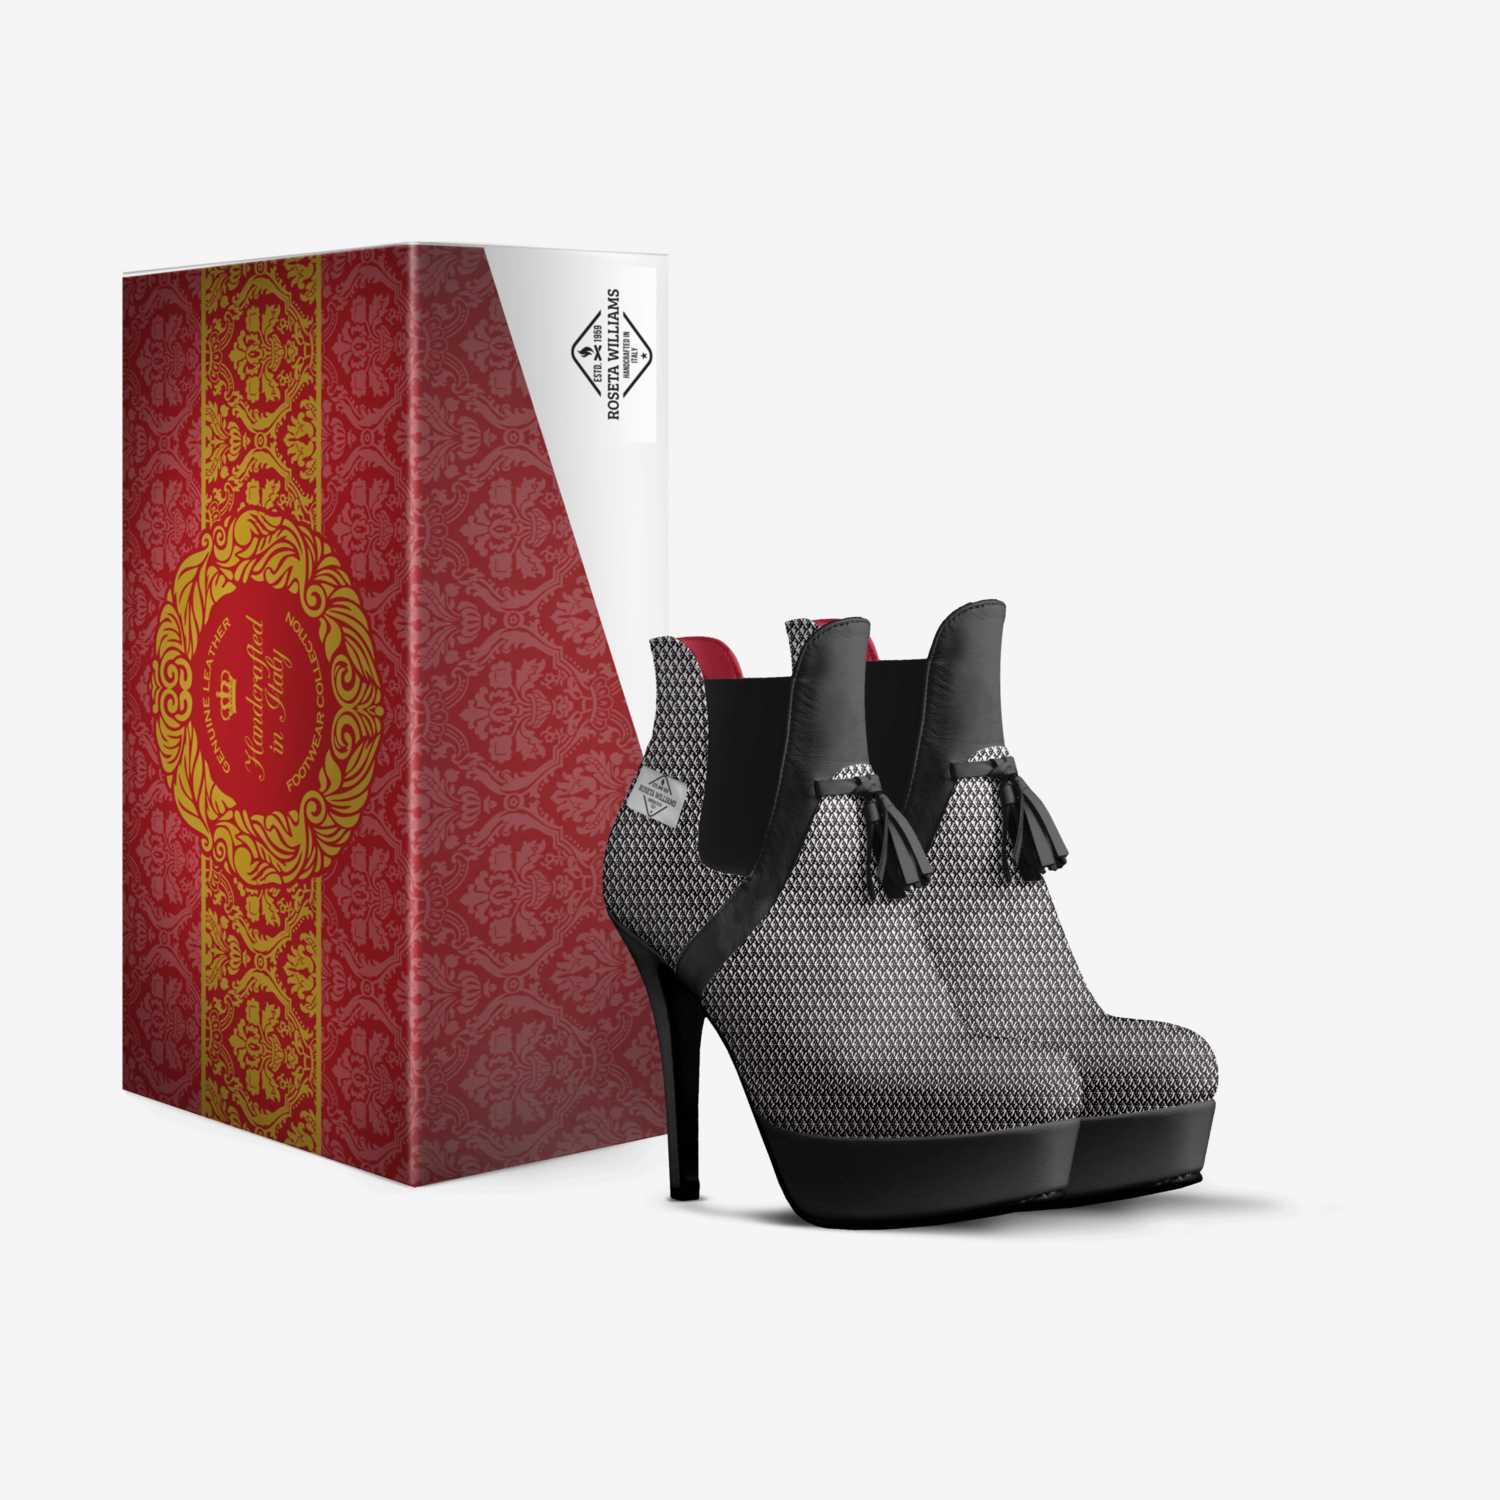 Roseta custom made in Italy shoes by Roseta Williams | Box view